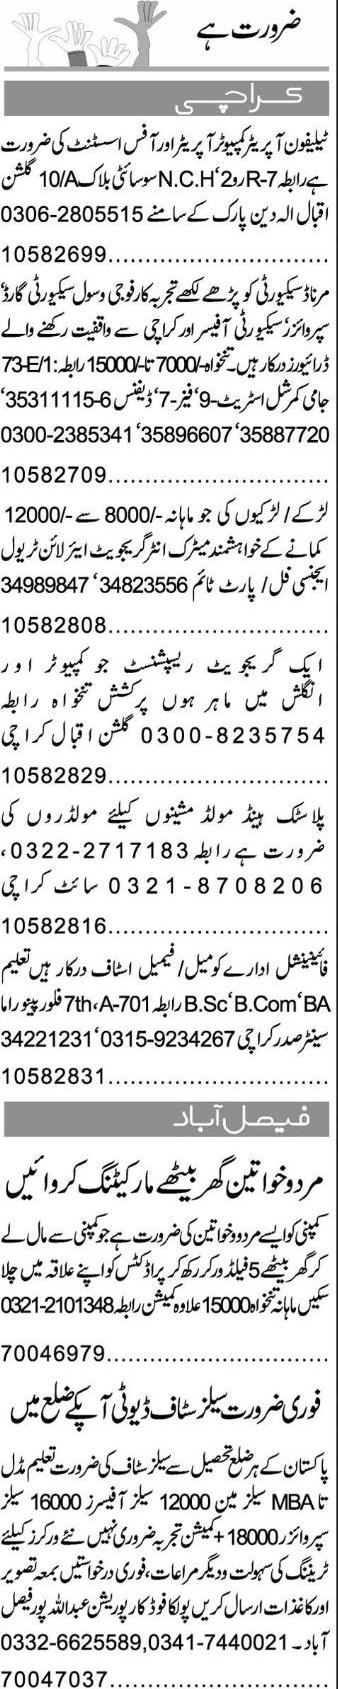 Misc. Jobs in Karachi Classified